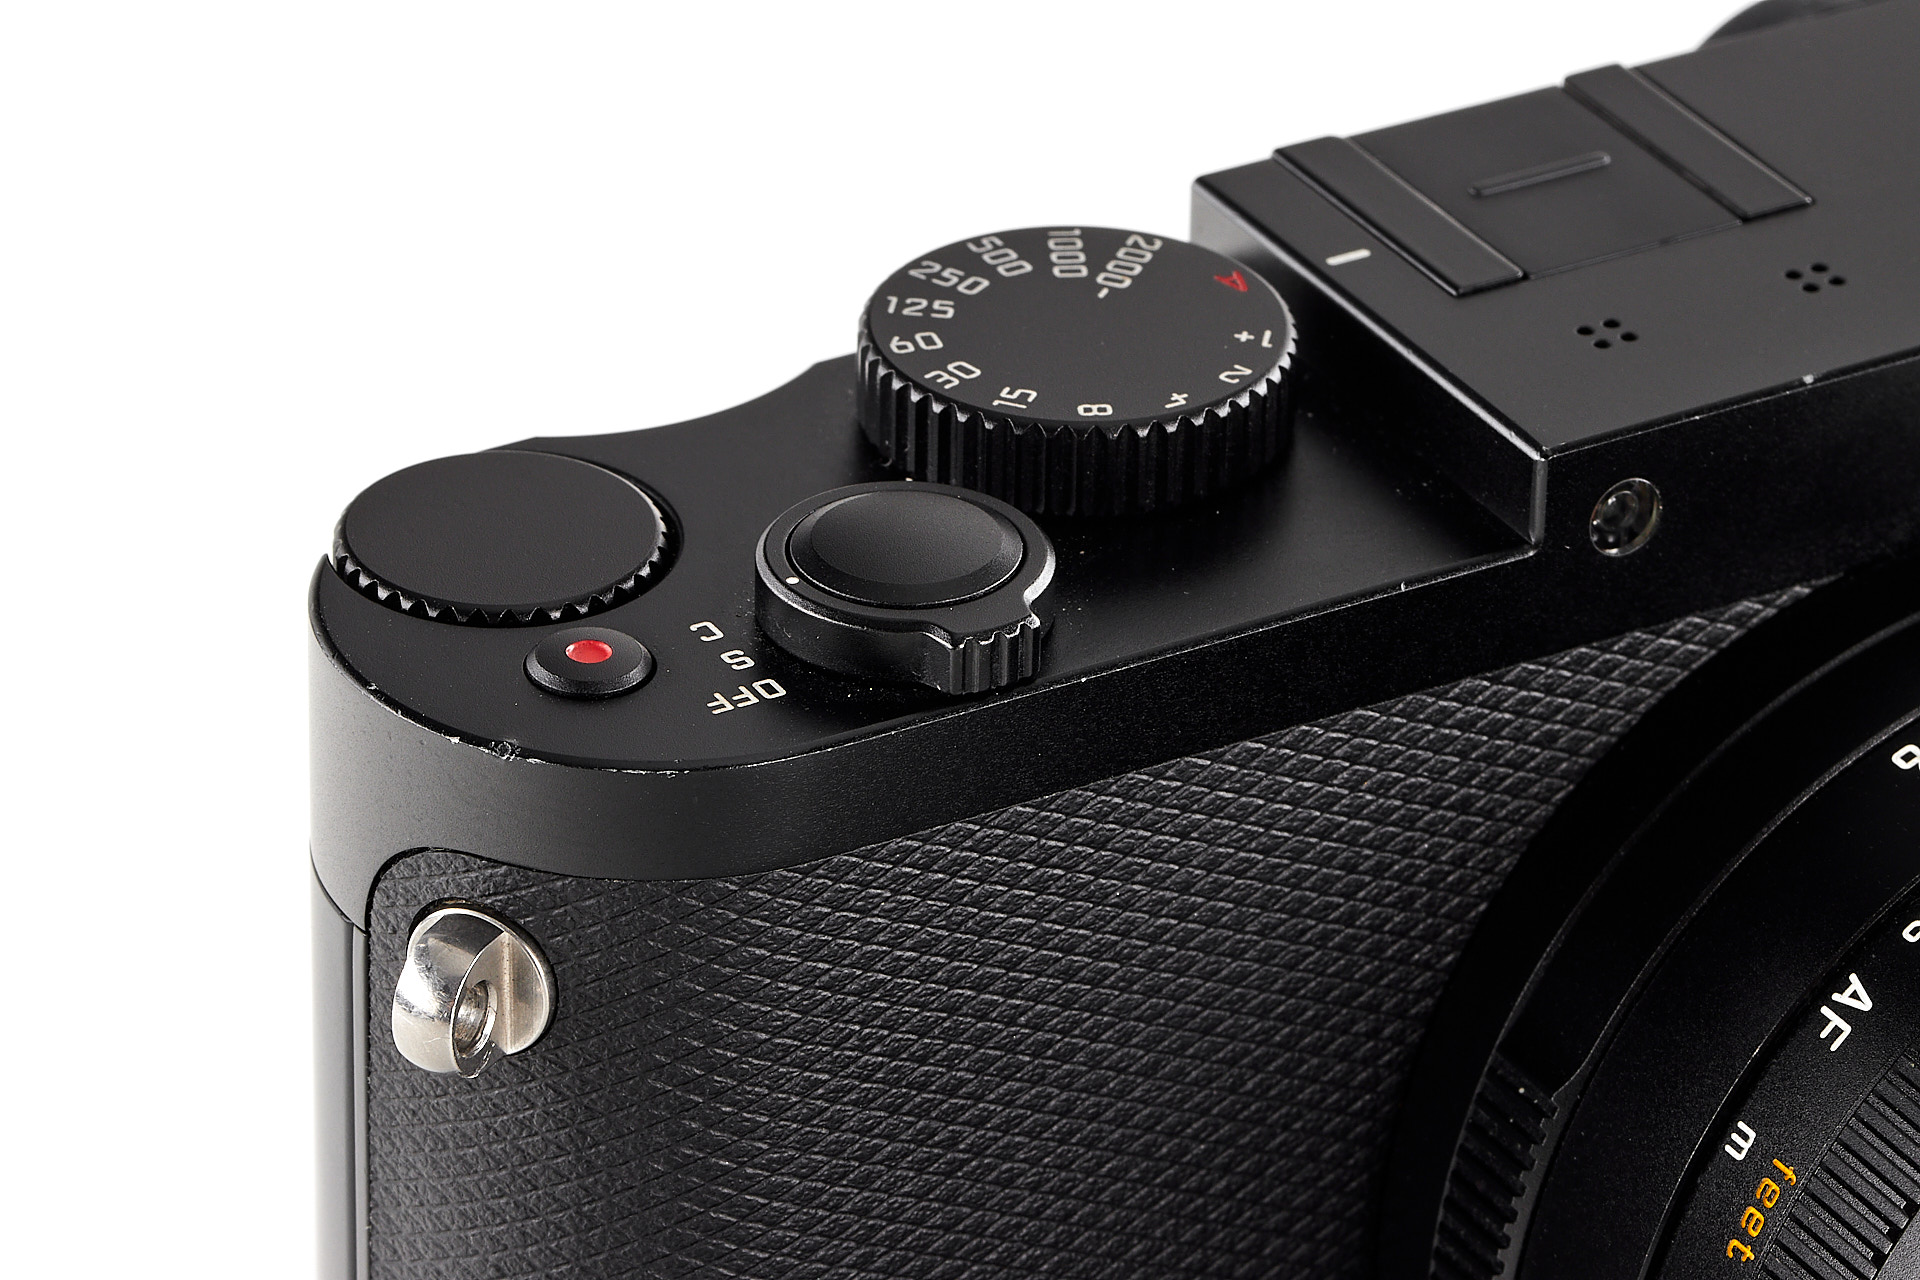 Leica Q (Typ 116) sw.